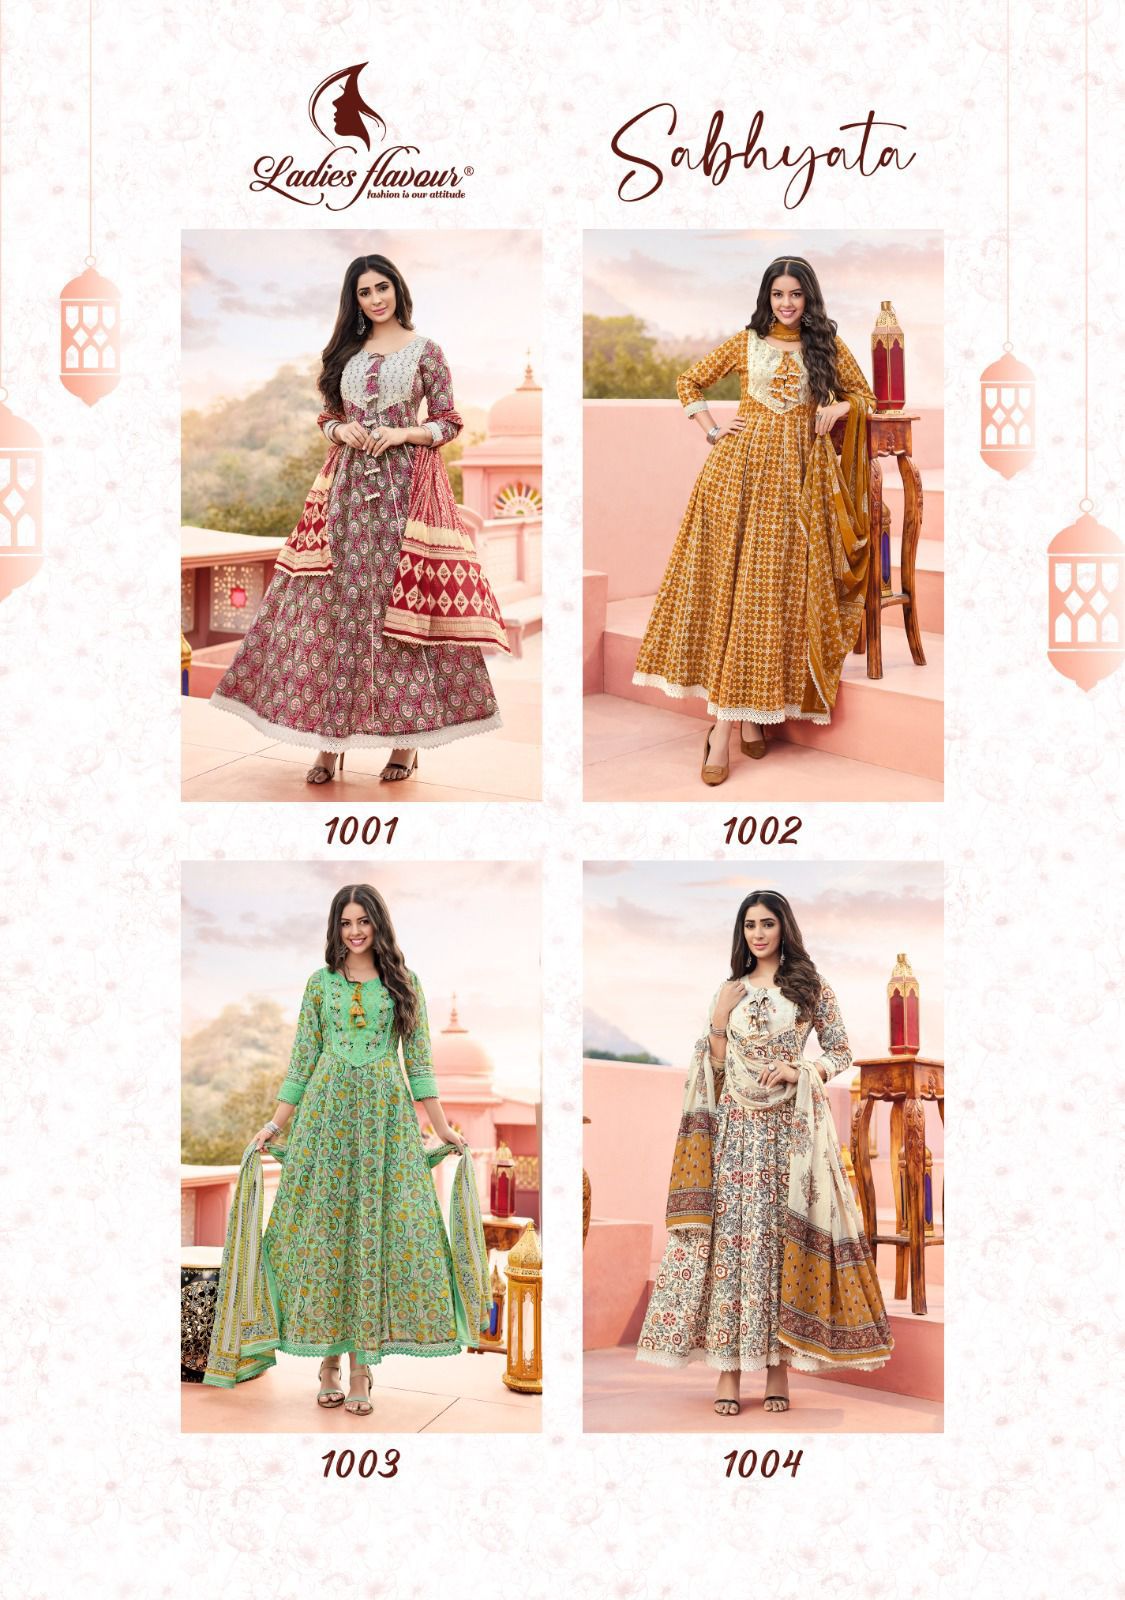 Ladies Flavour Sabhyata collection 7